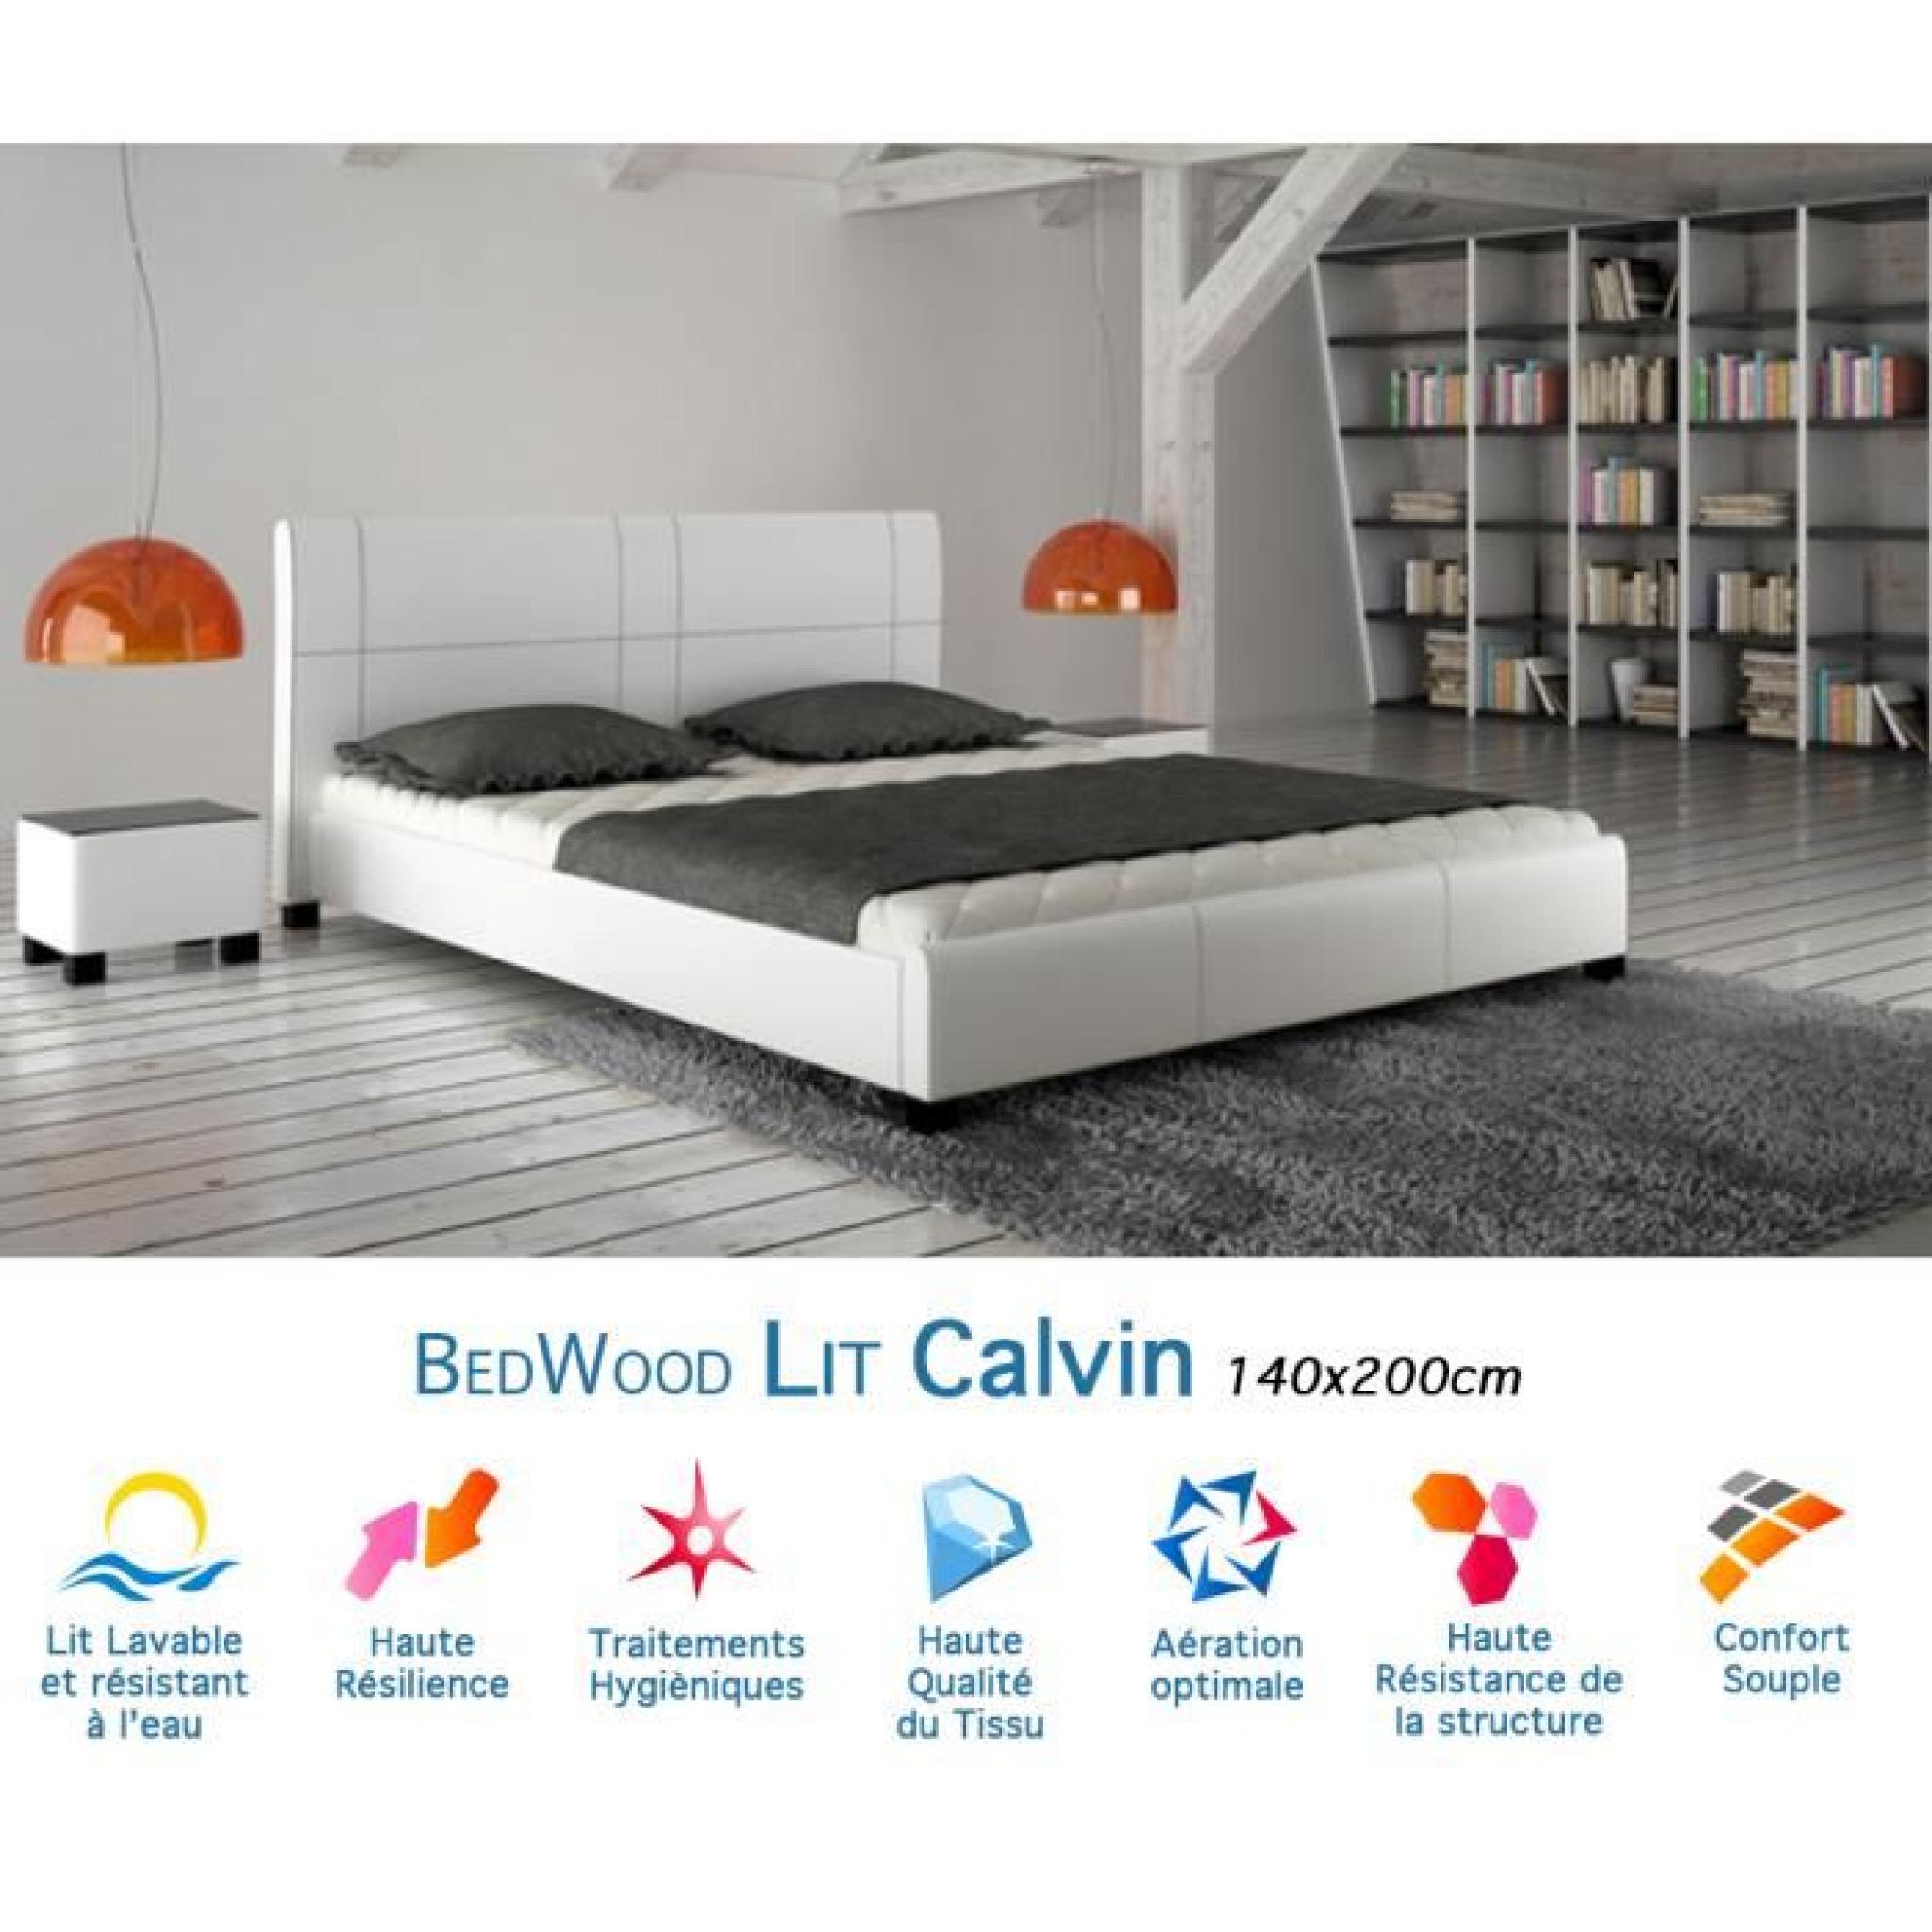 Lit Design Bedwood Calvin 140x200cm